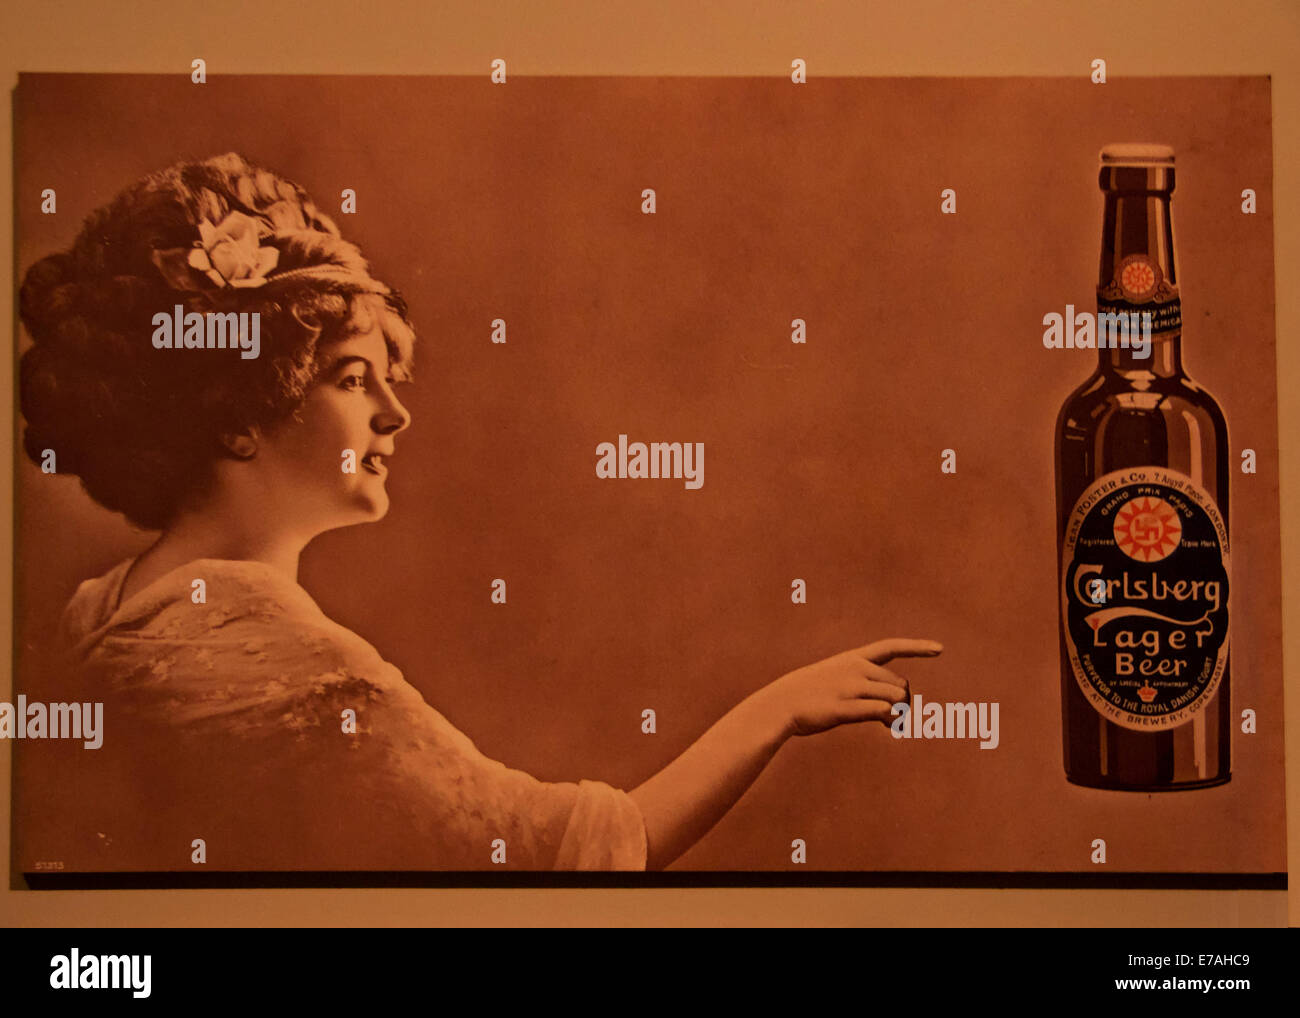 Vecchio seppia poster promuove Carlsberg lager birra. Foto Stock